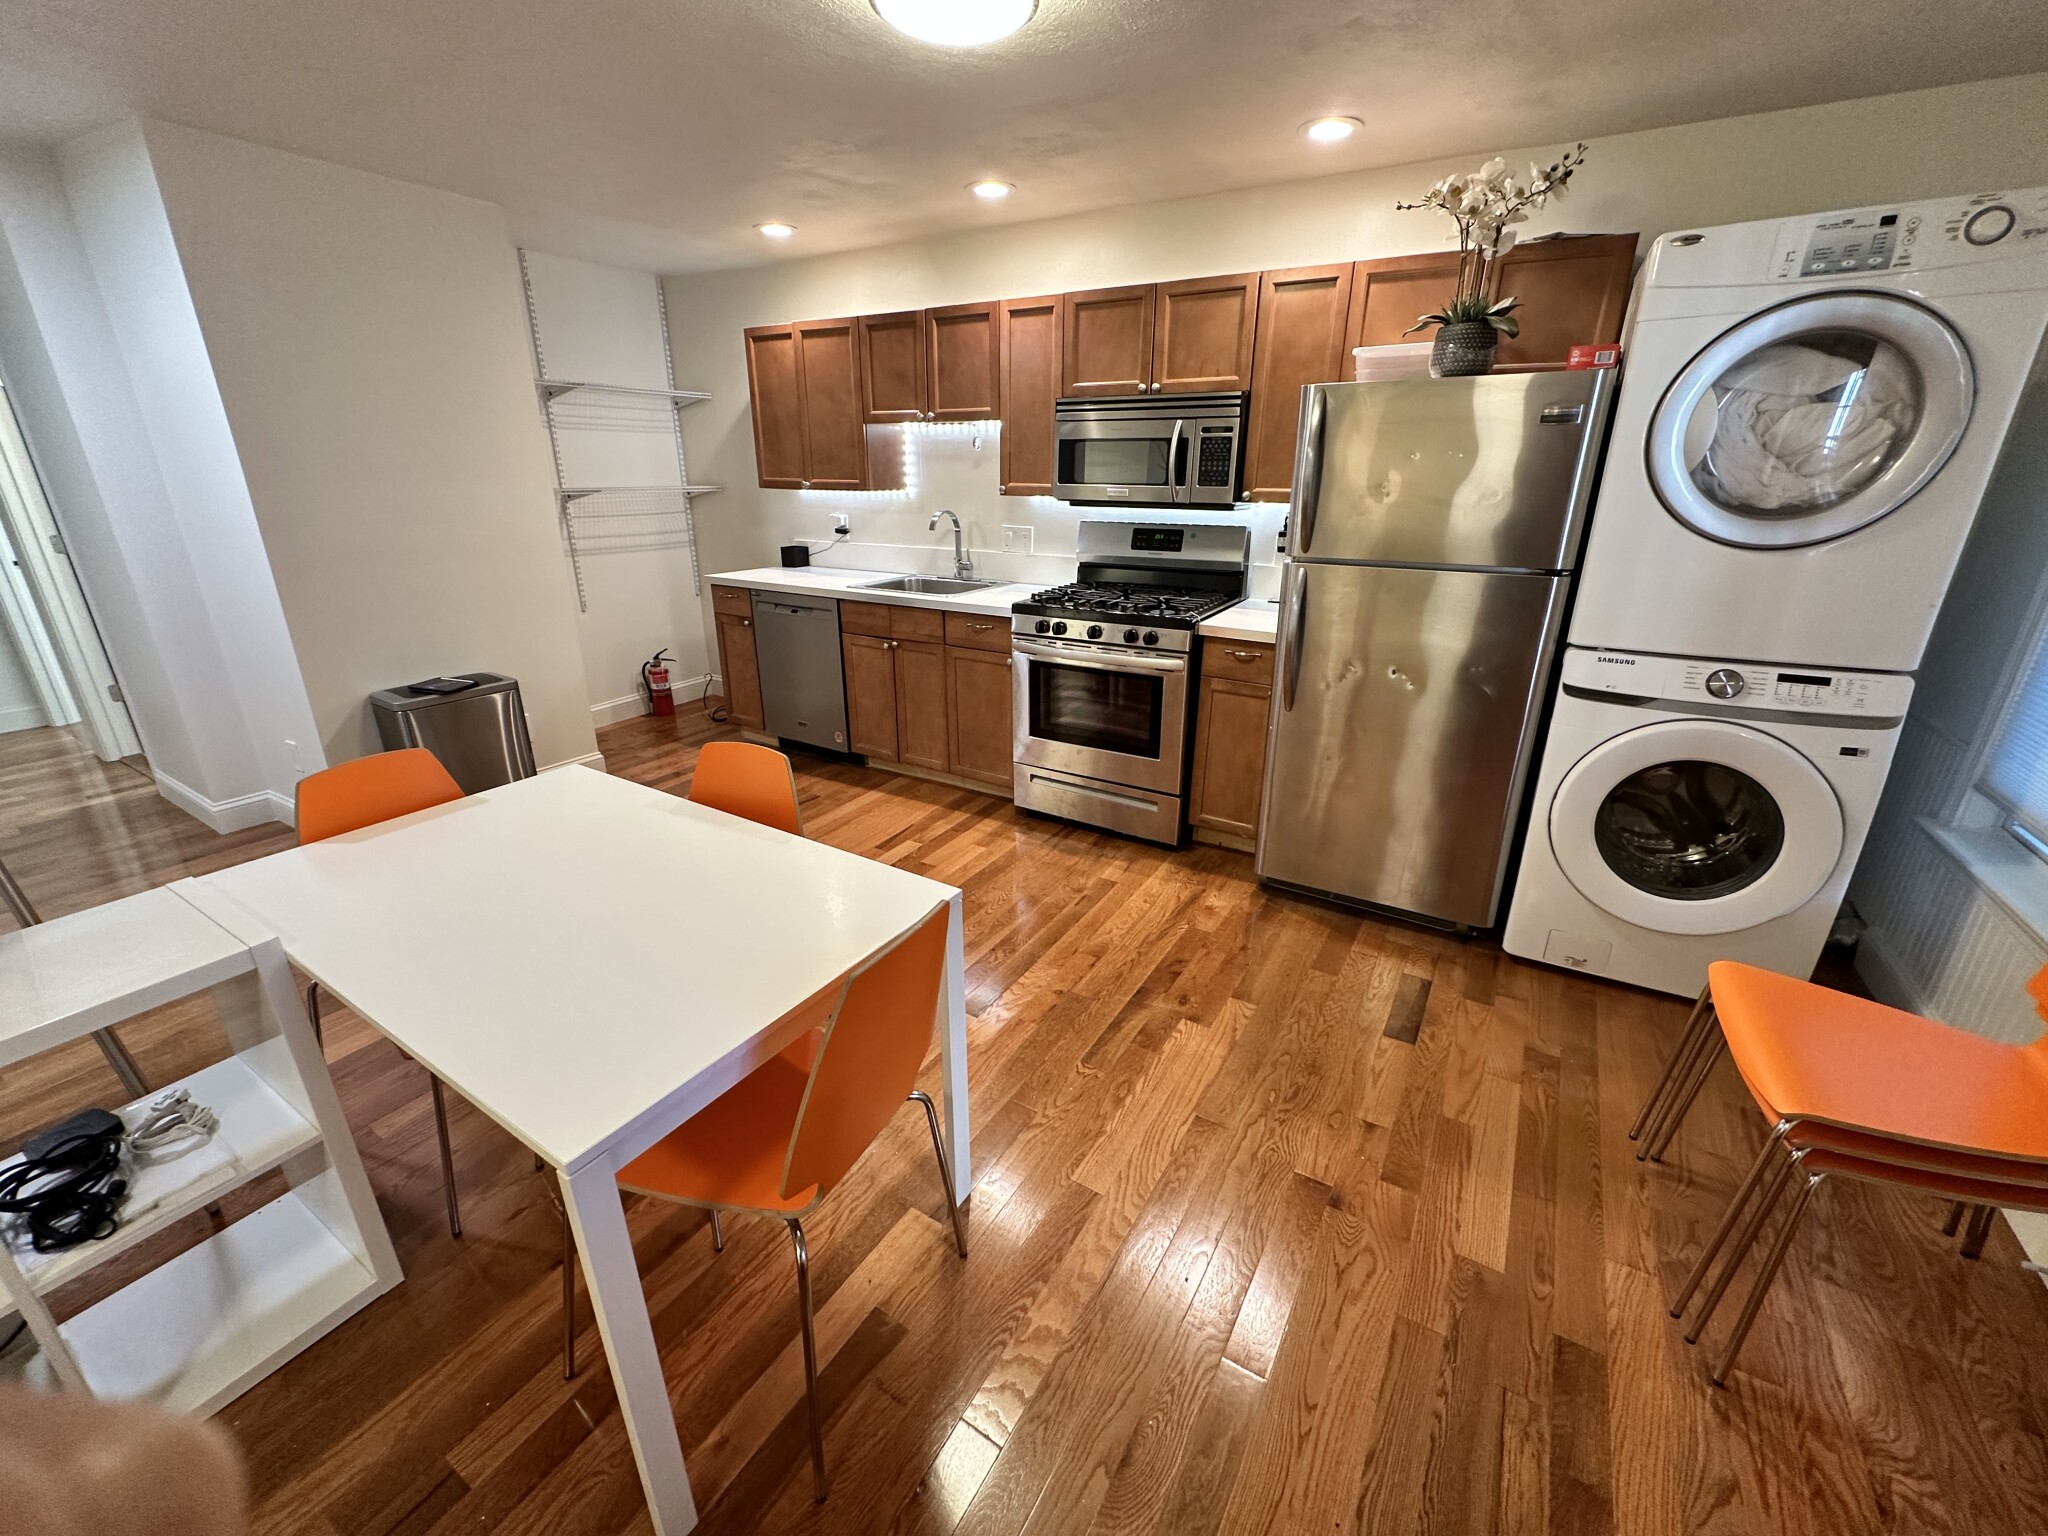 Photos of apartment on Marine Rd.,Boston MA 02127